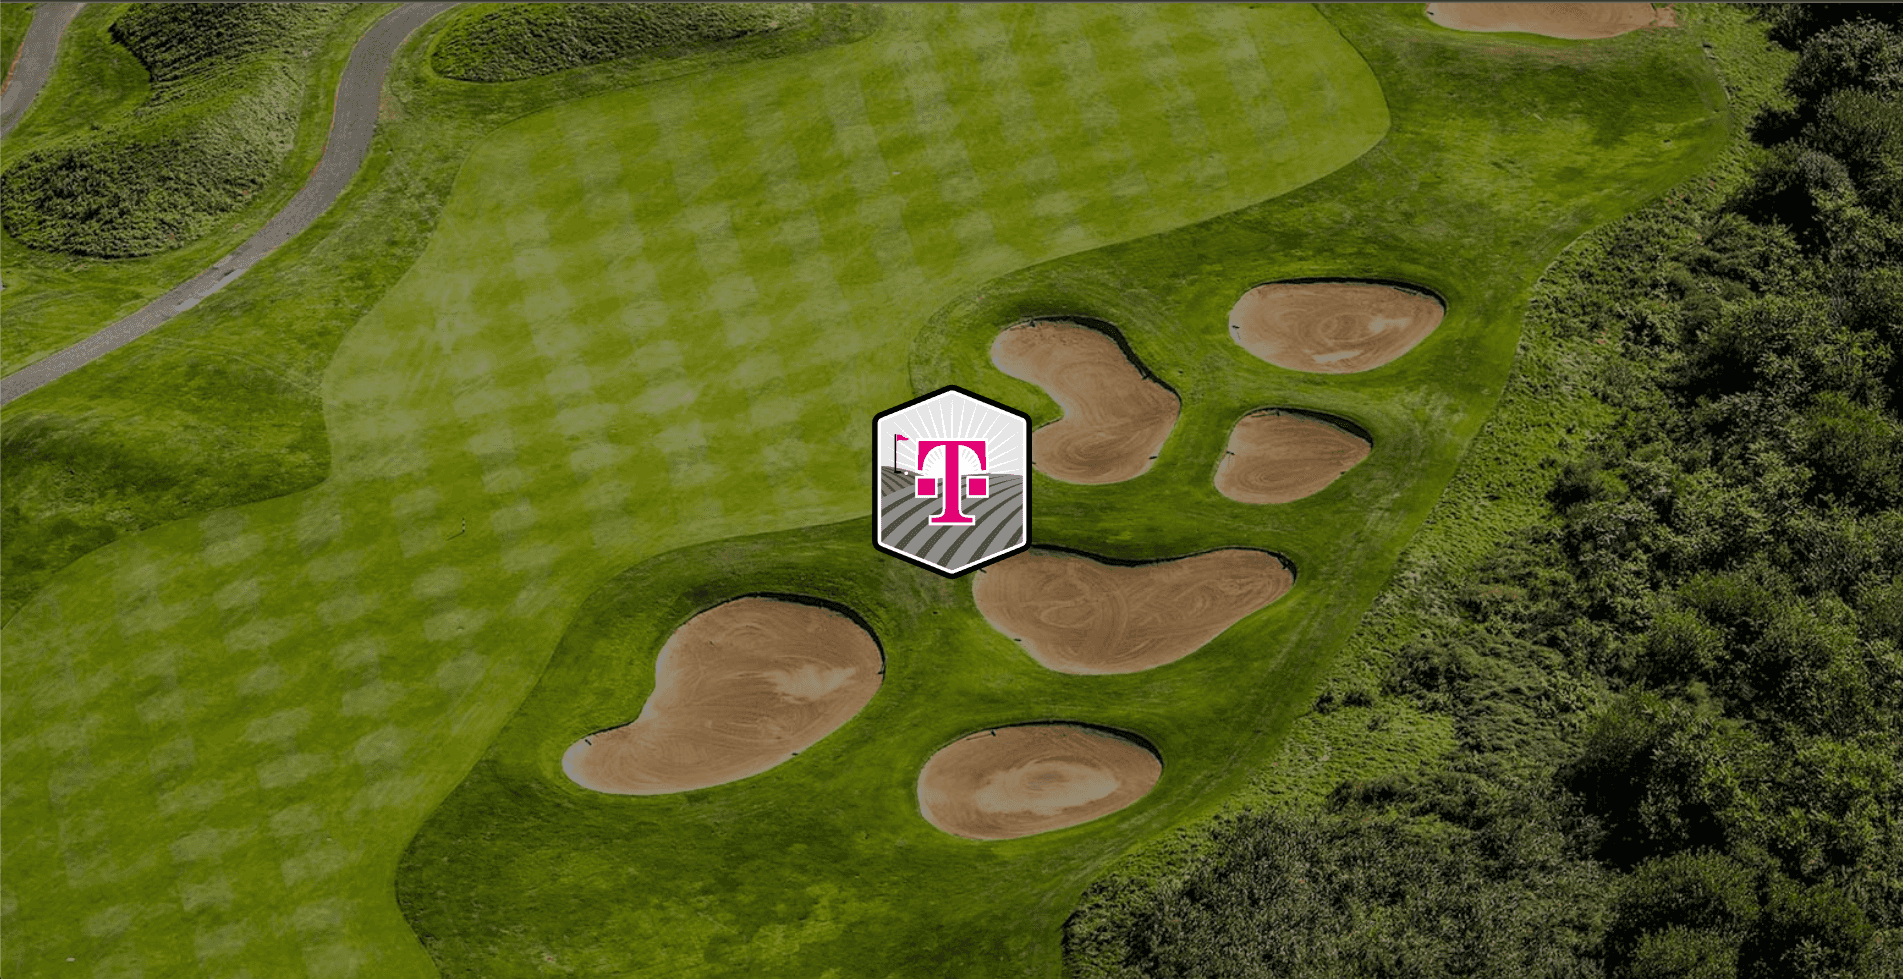 T-Mobile Golf Tournament Website